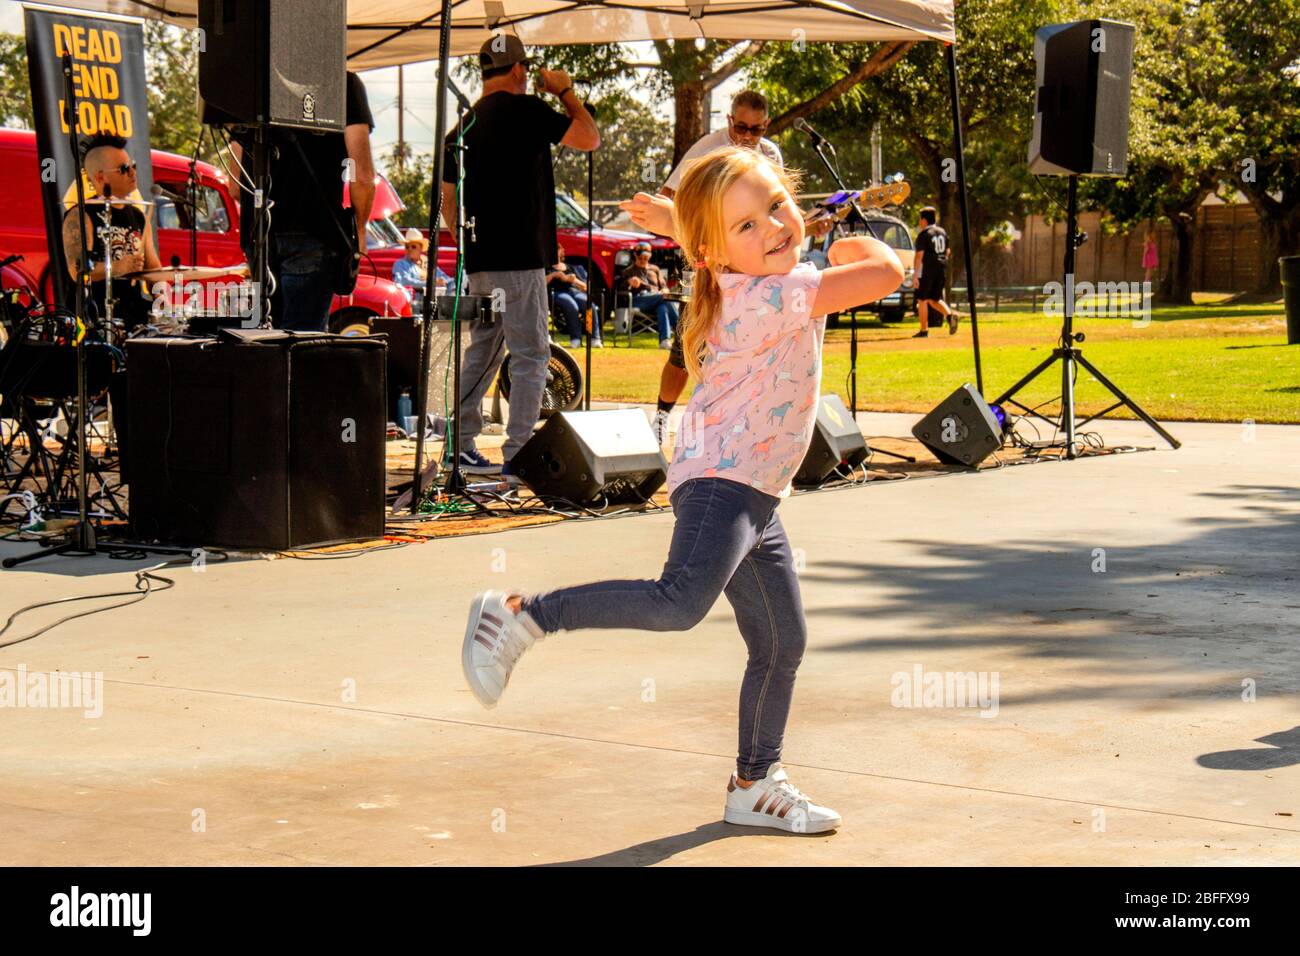 A three-year-old girl dances enthusiastically to a rock band at an outdoor fair in a Costa Mesa, CA, park. Stock Photo